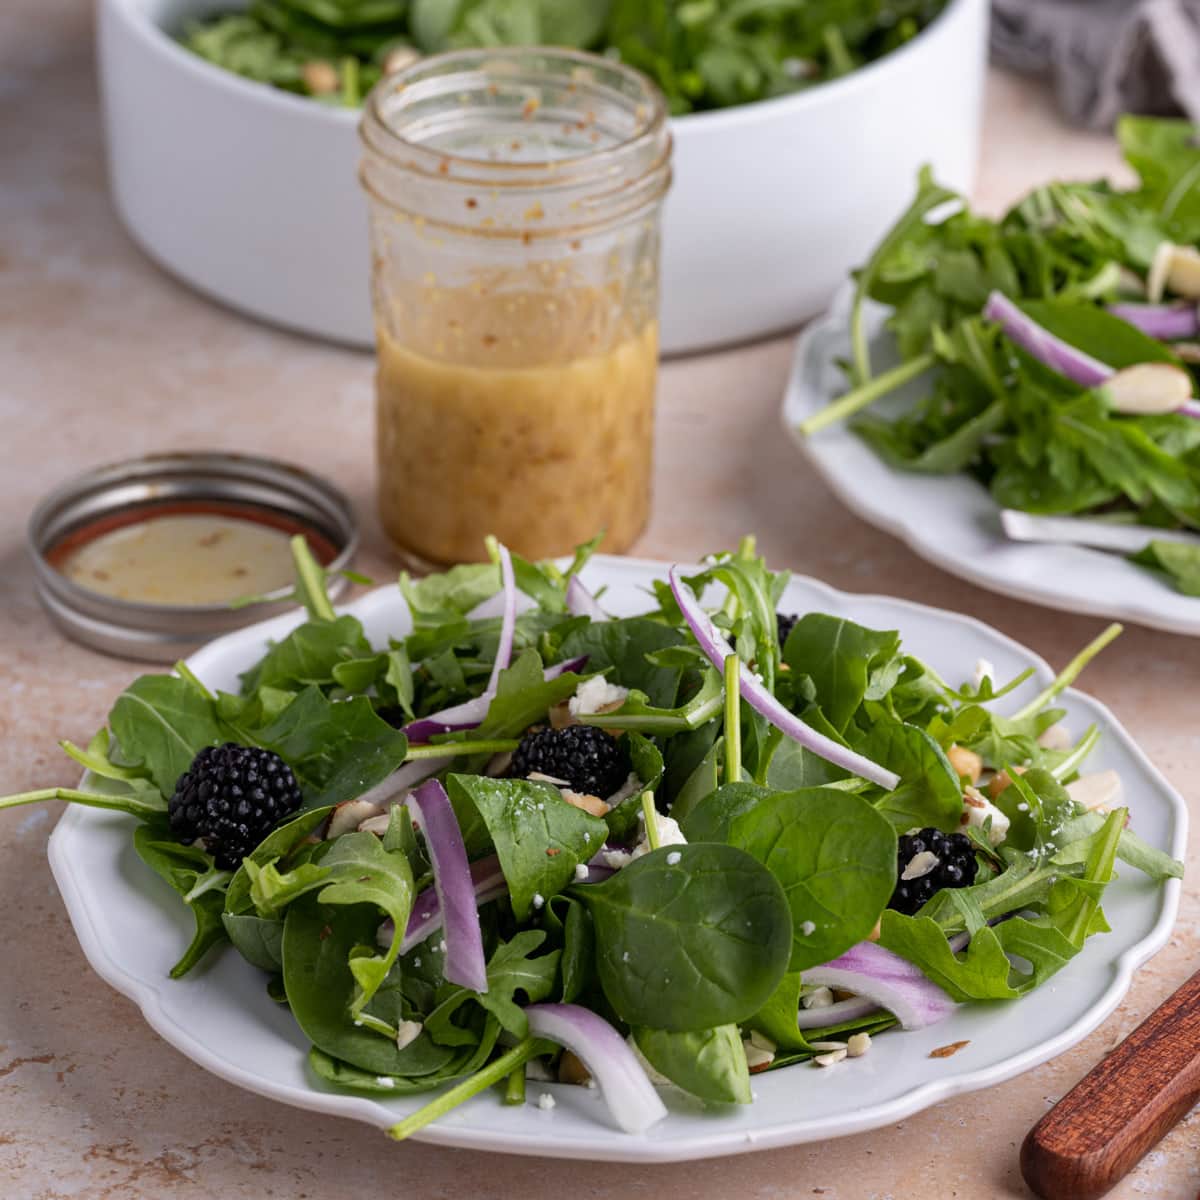 Plate of Spinach Arugula Salad with Honey Dijon Vinaigrette behind it